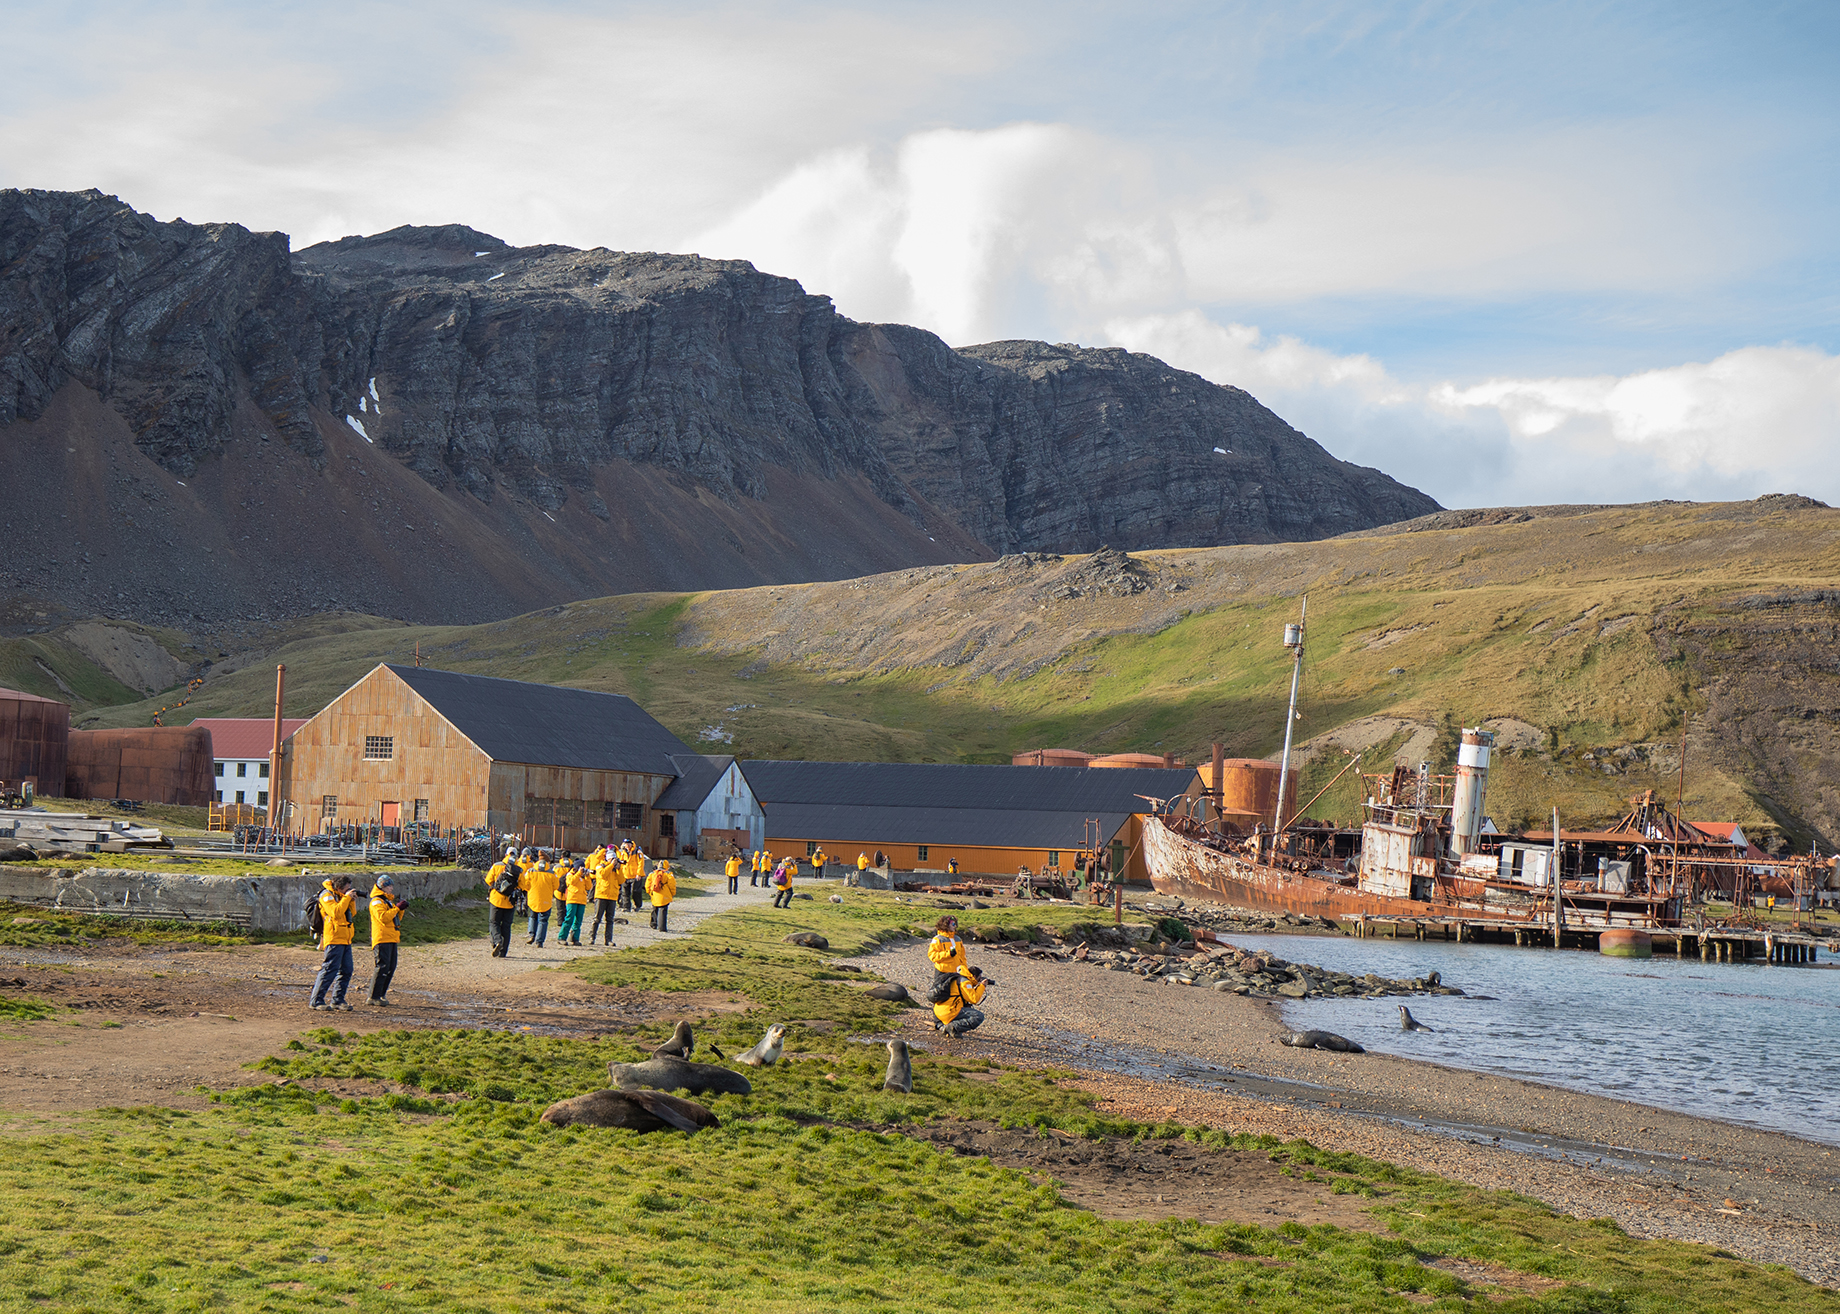 Abandoned Whaling Station - Grytviken, South Georgia